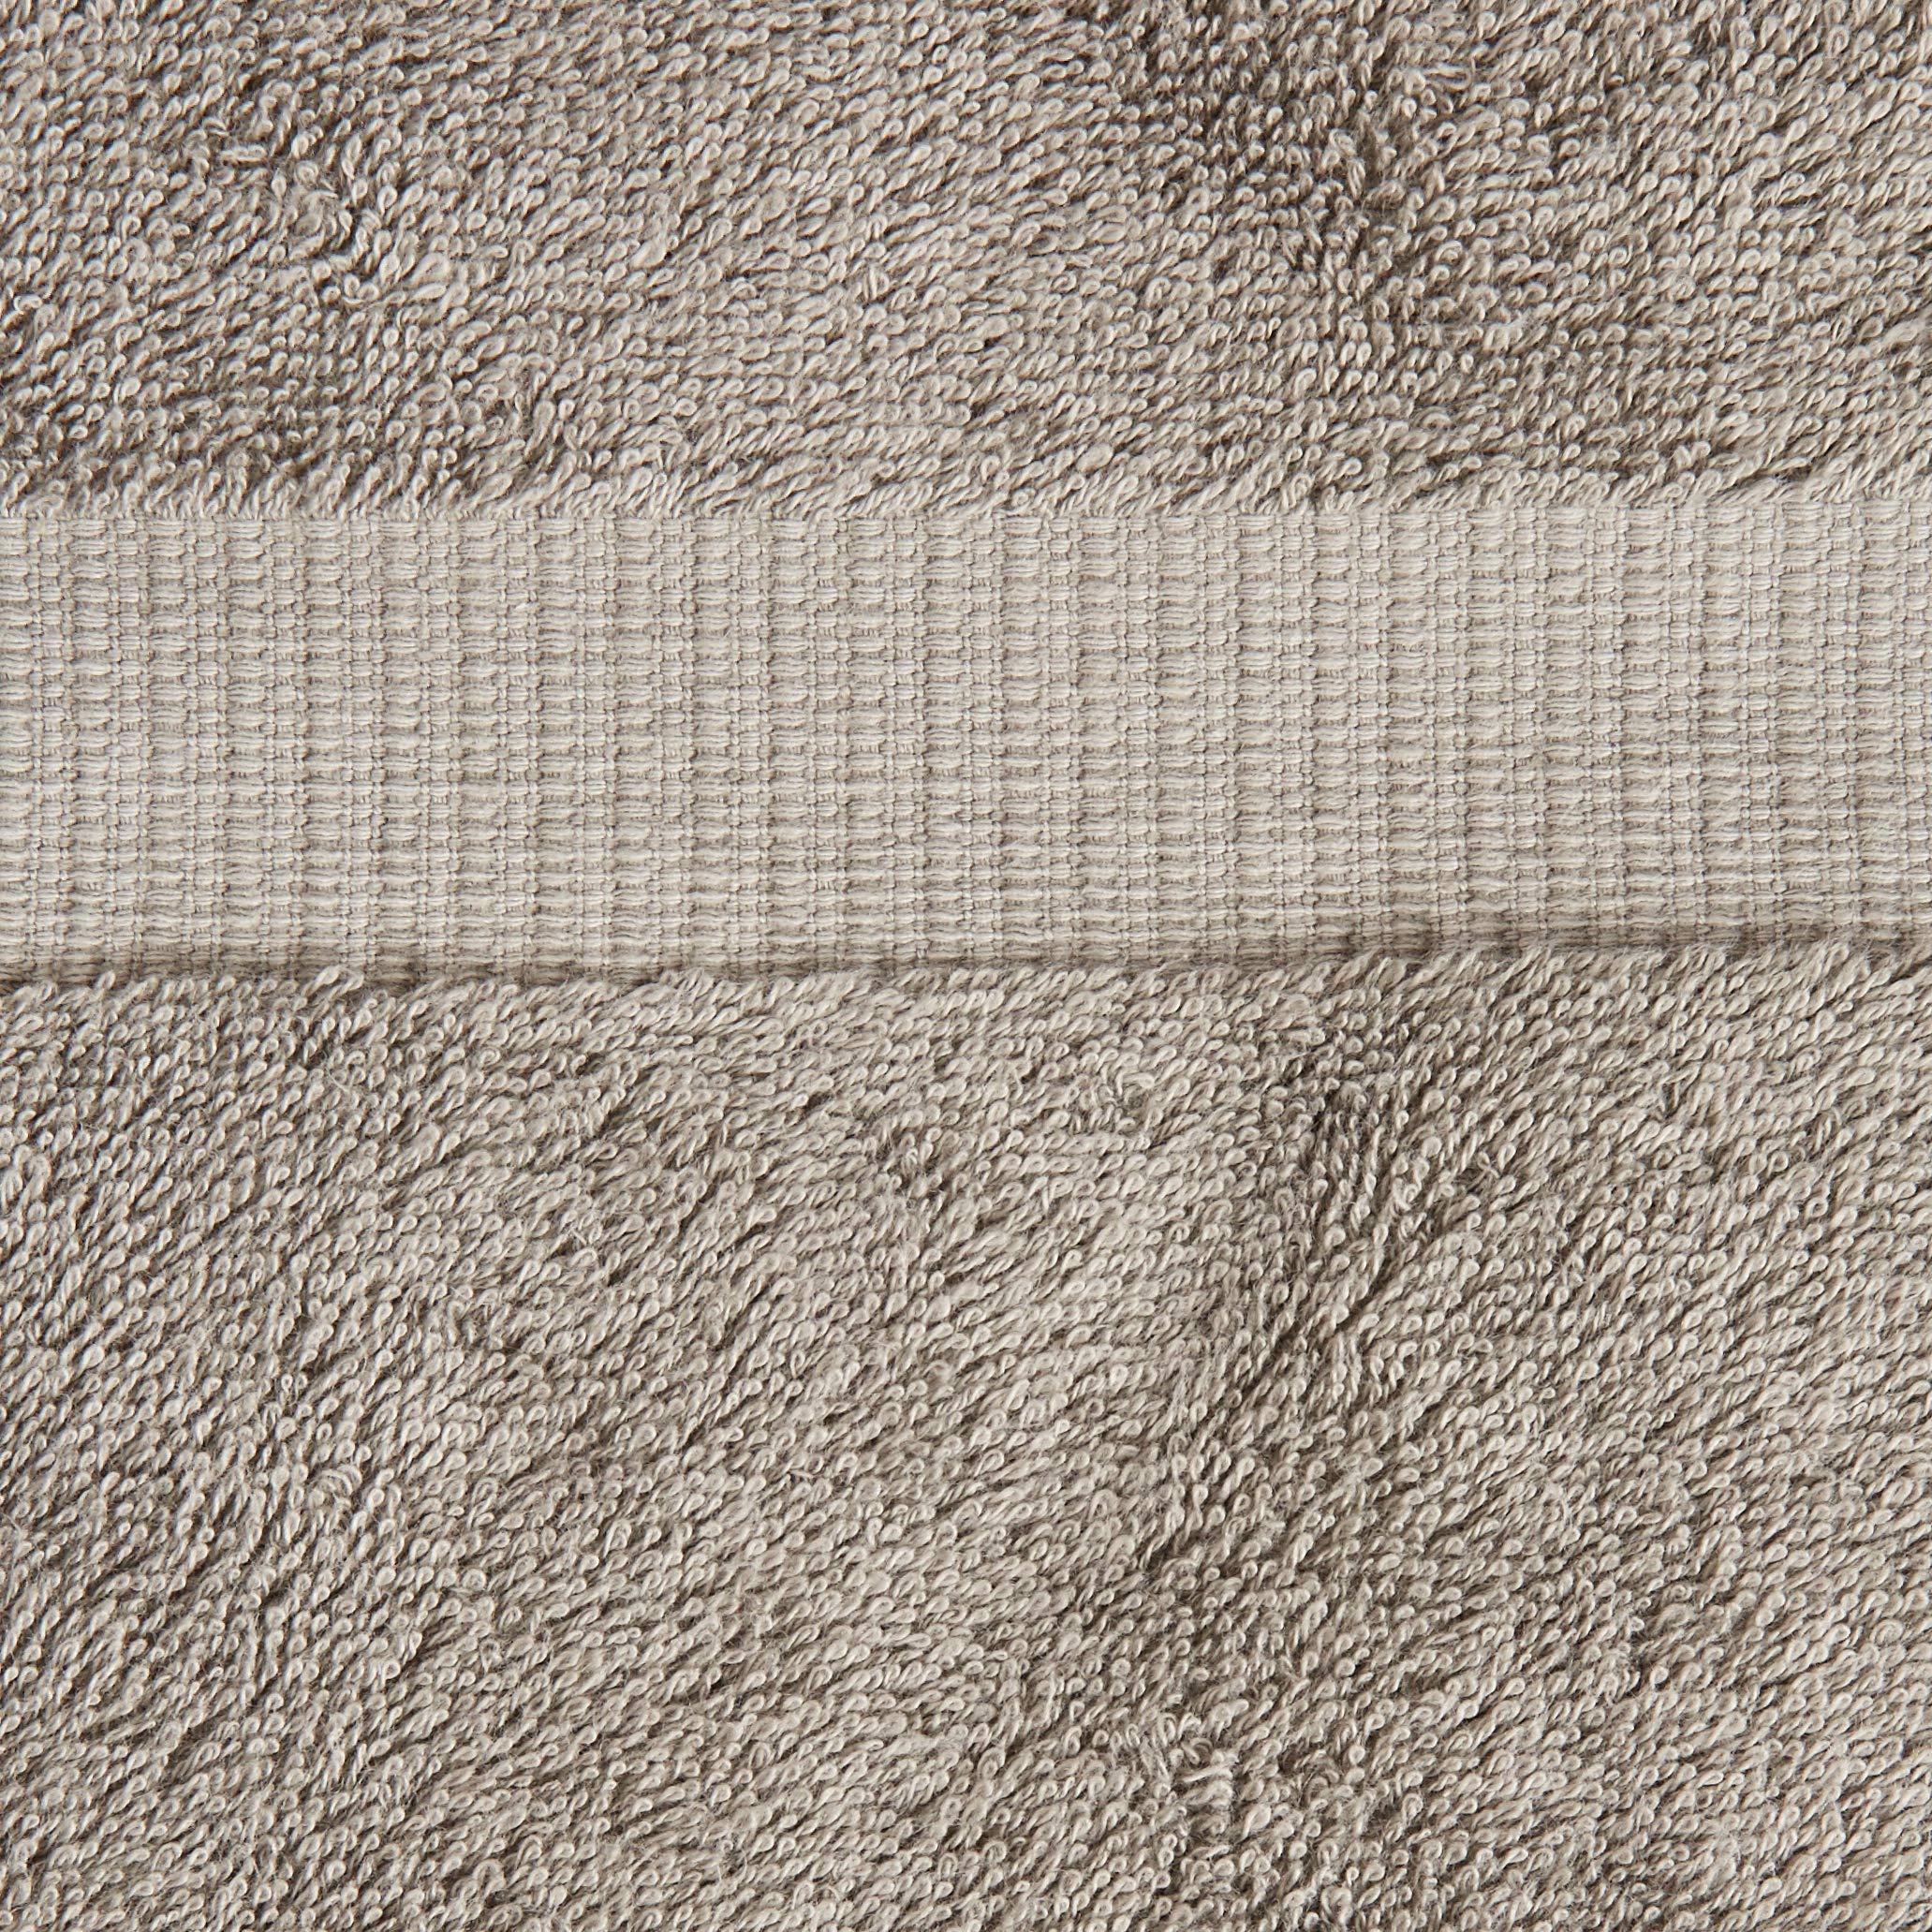 Chakir Turkish Linens Turkish Cotton Luxury Hotel & Spa Bath Towel, Bath Sheet - Set of 2, Gray